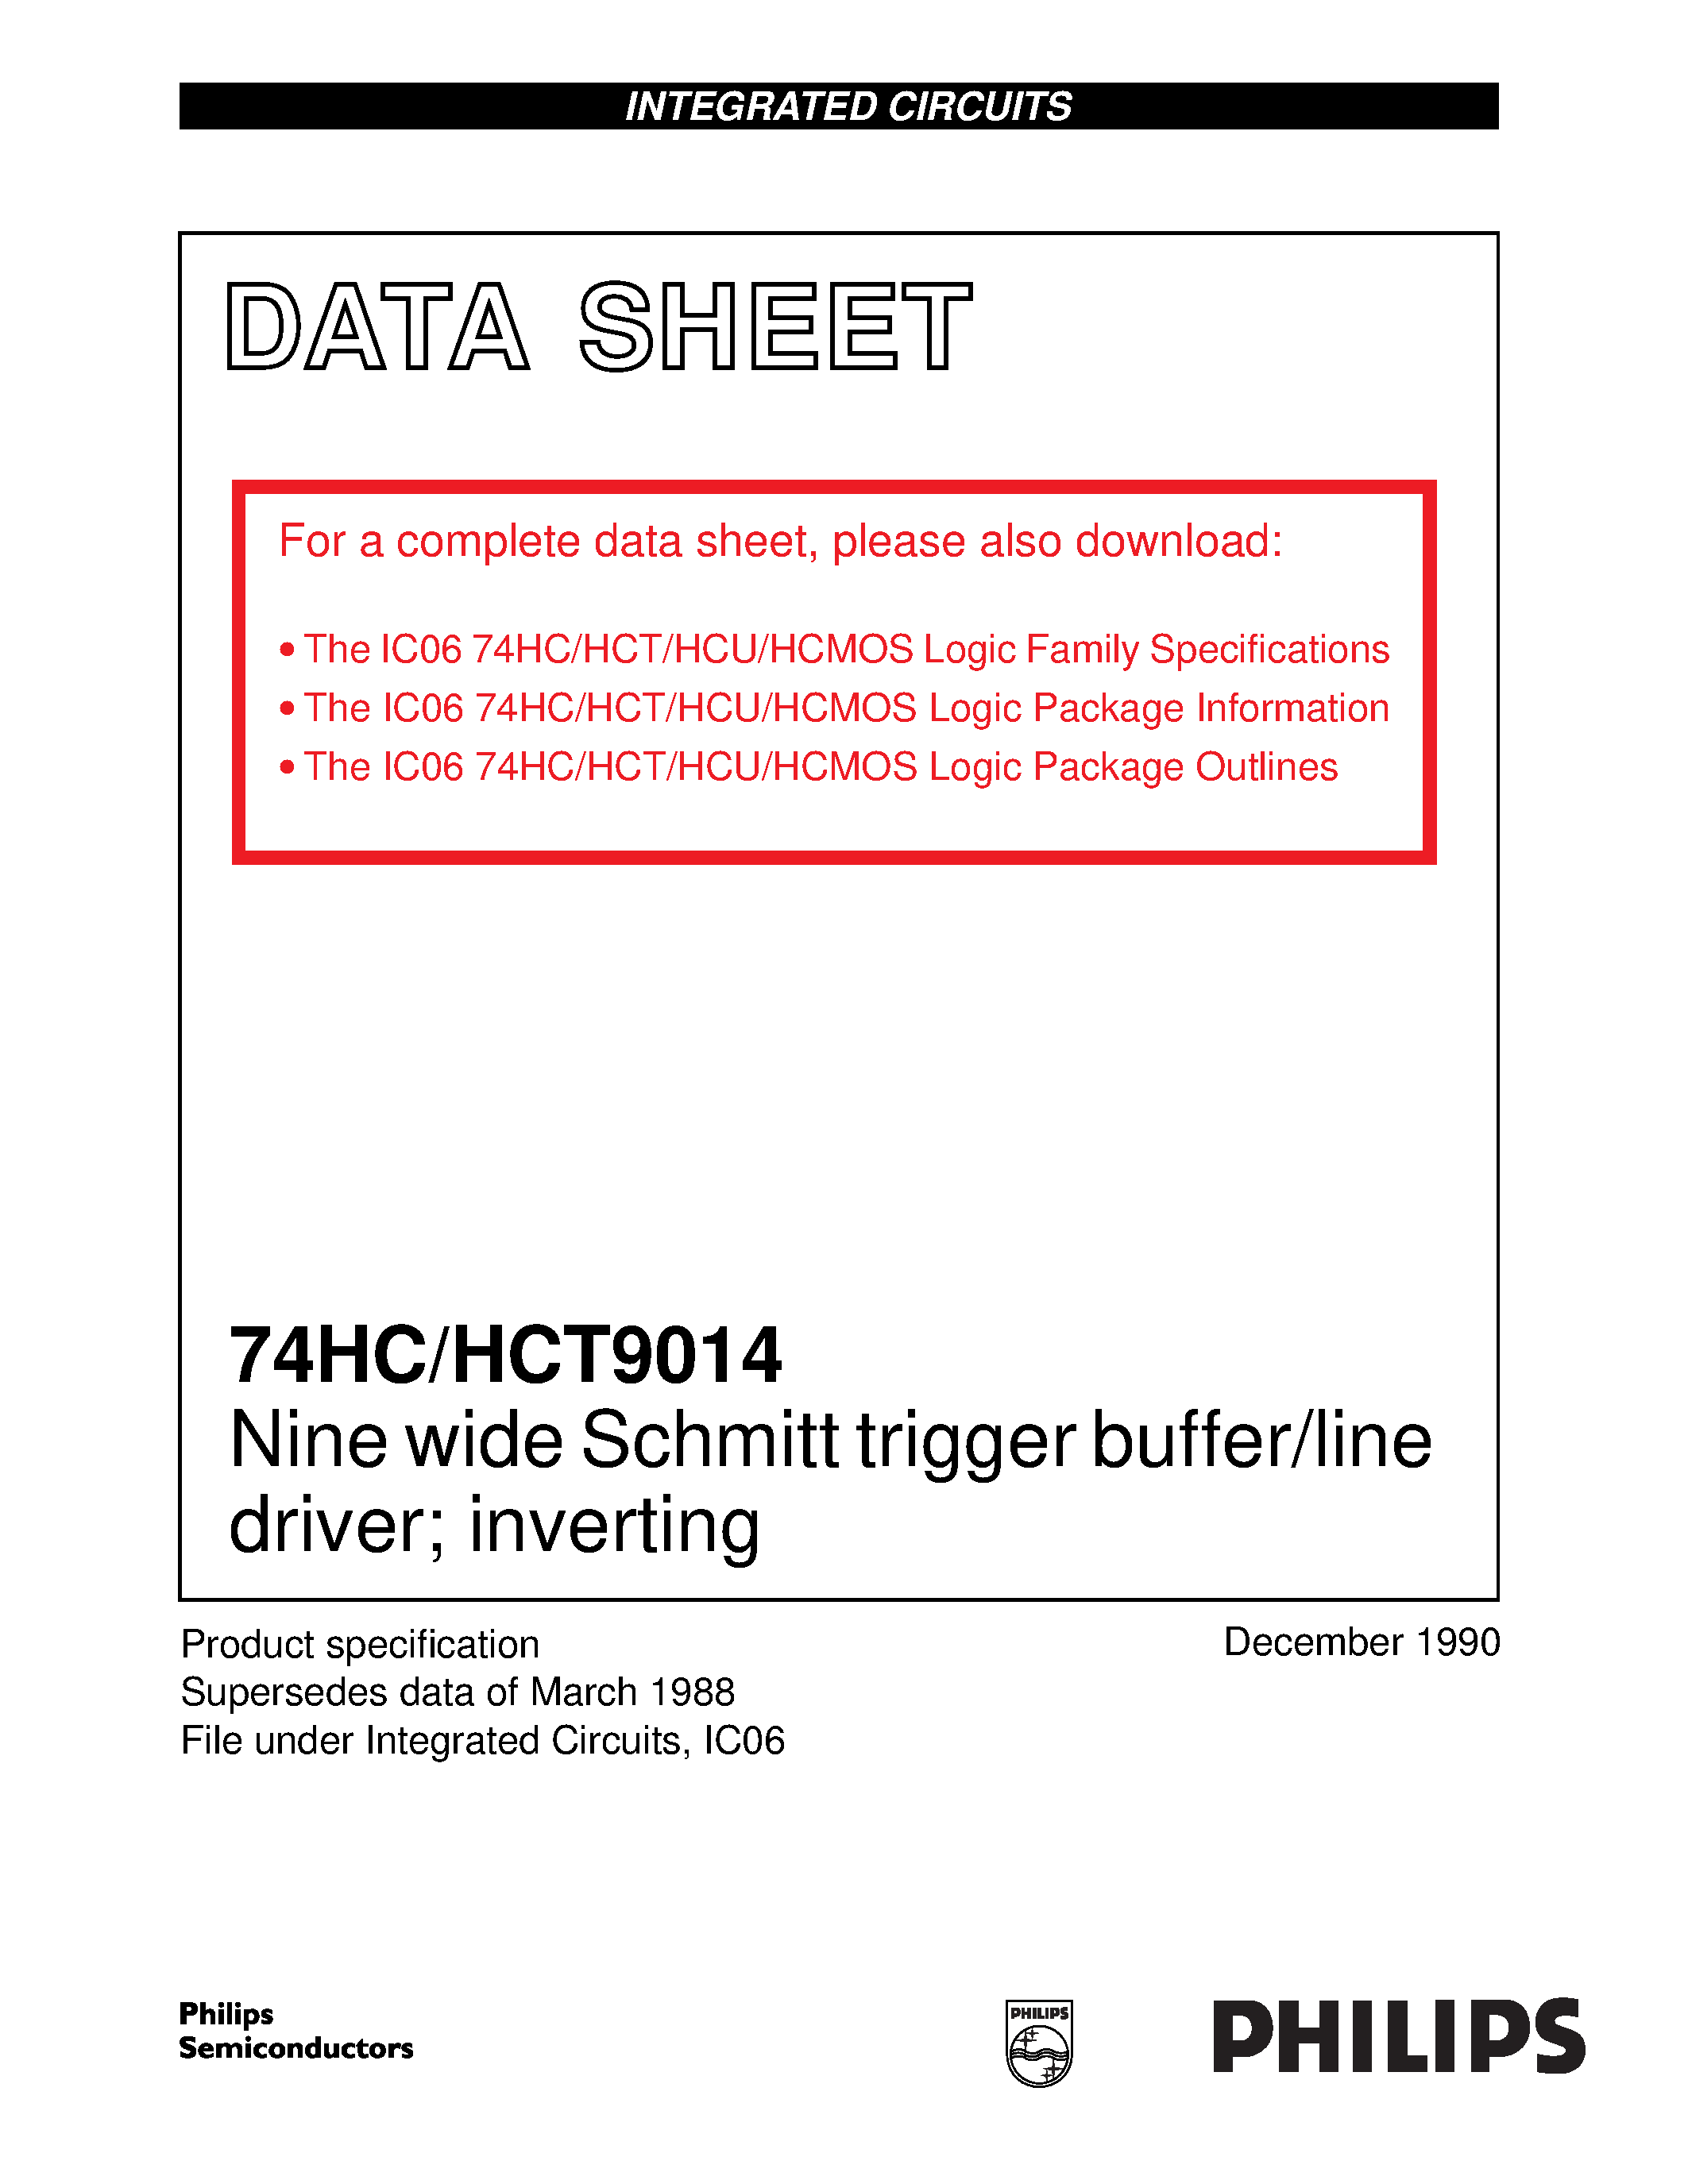 Даташит 74HCT9014 - Nine wide Schmitt trigger buffer/line driver; inverting страница 1